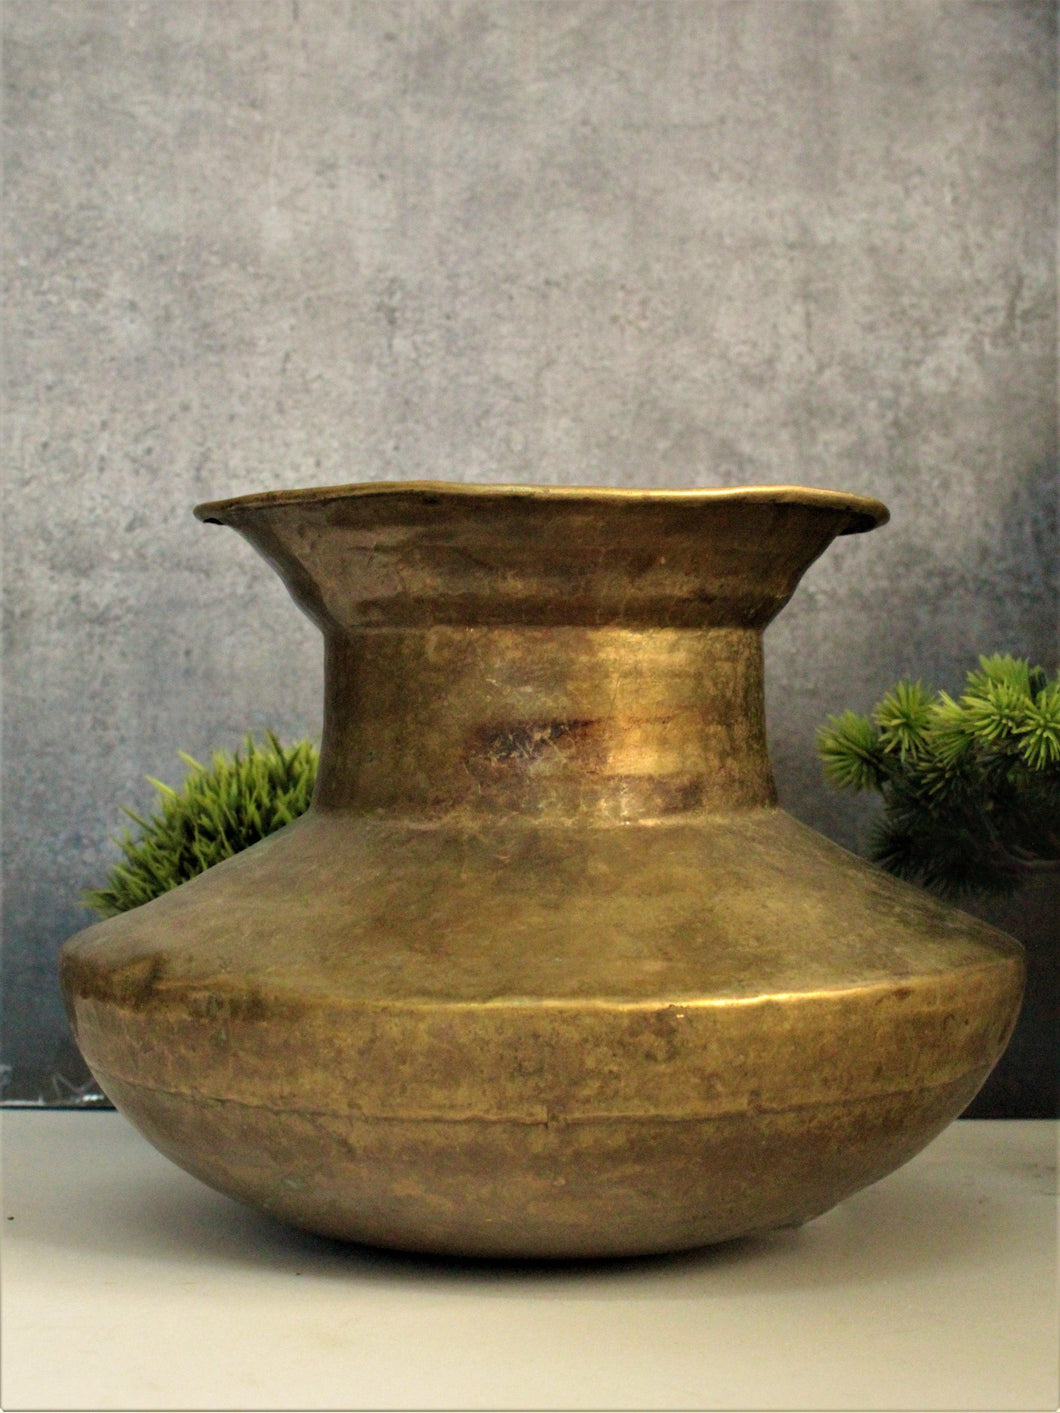 Beautiful Vintage Brass Chari / Oil or Ghee Vessel - Style It by Hanika